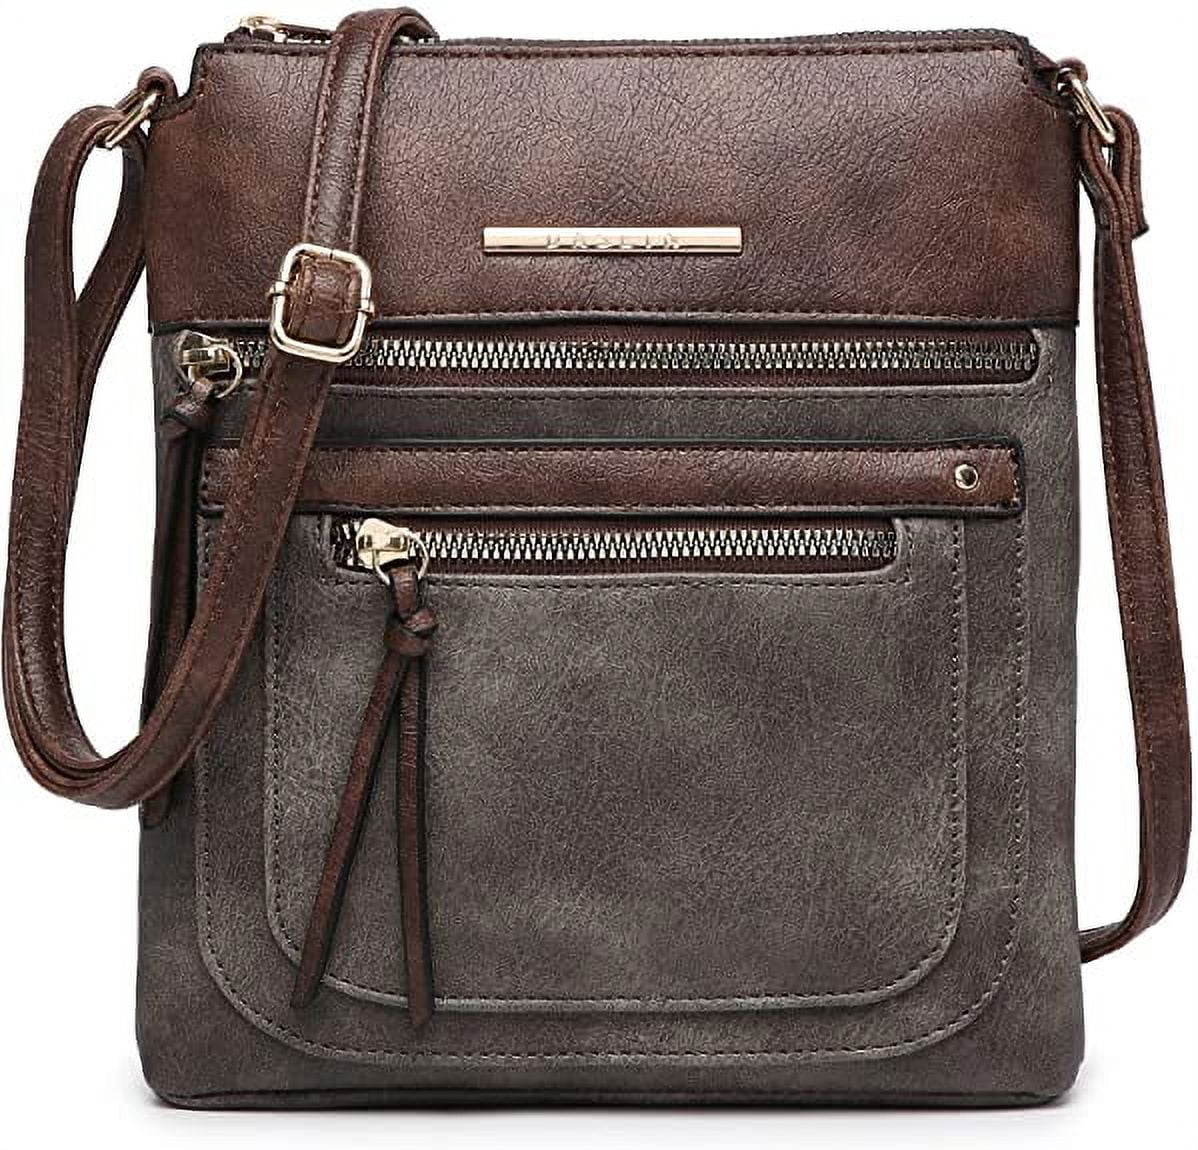 Stone Mountain Handbags Company Store | Homepage 011324